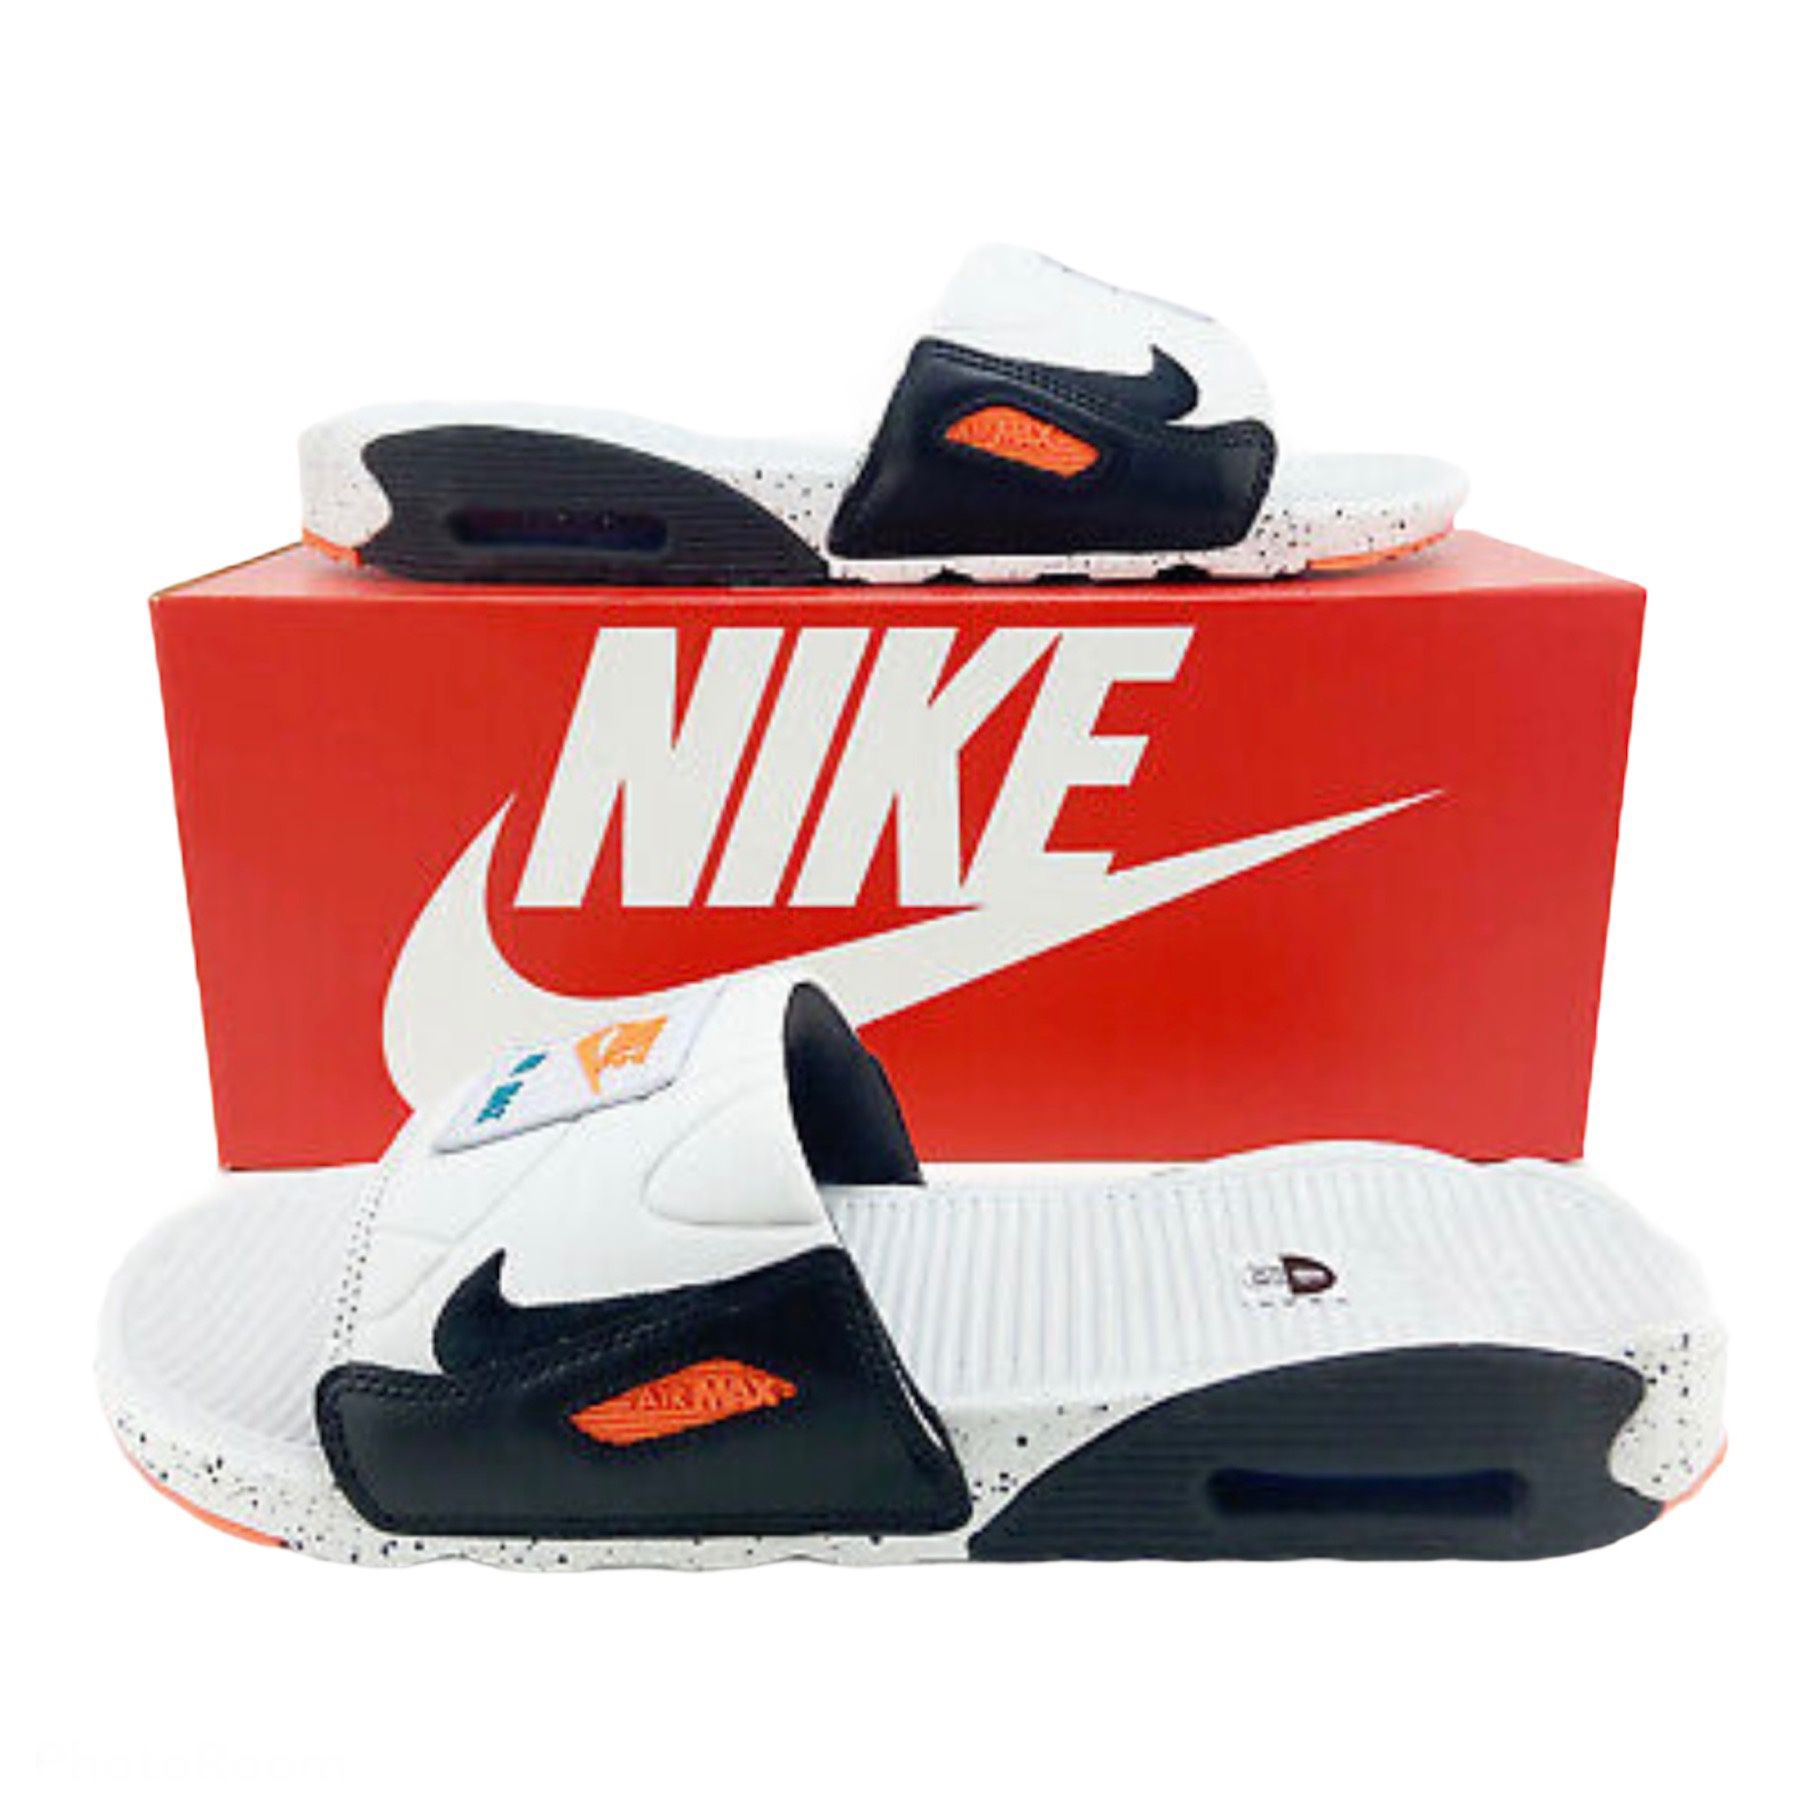 Nike Air Max 90 Slides Size 11, 12